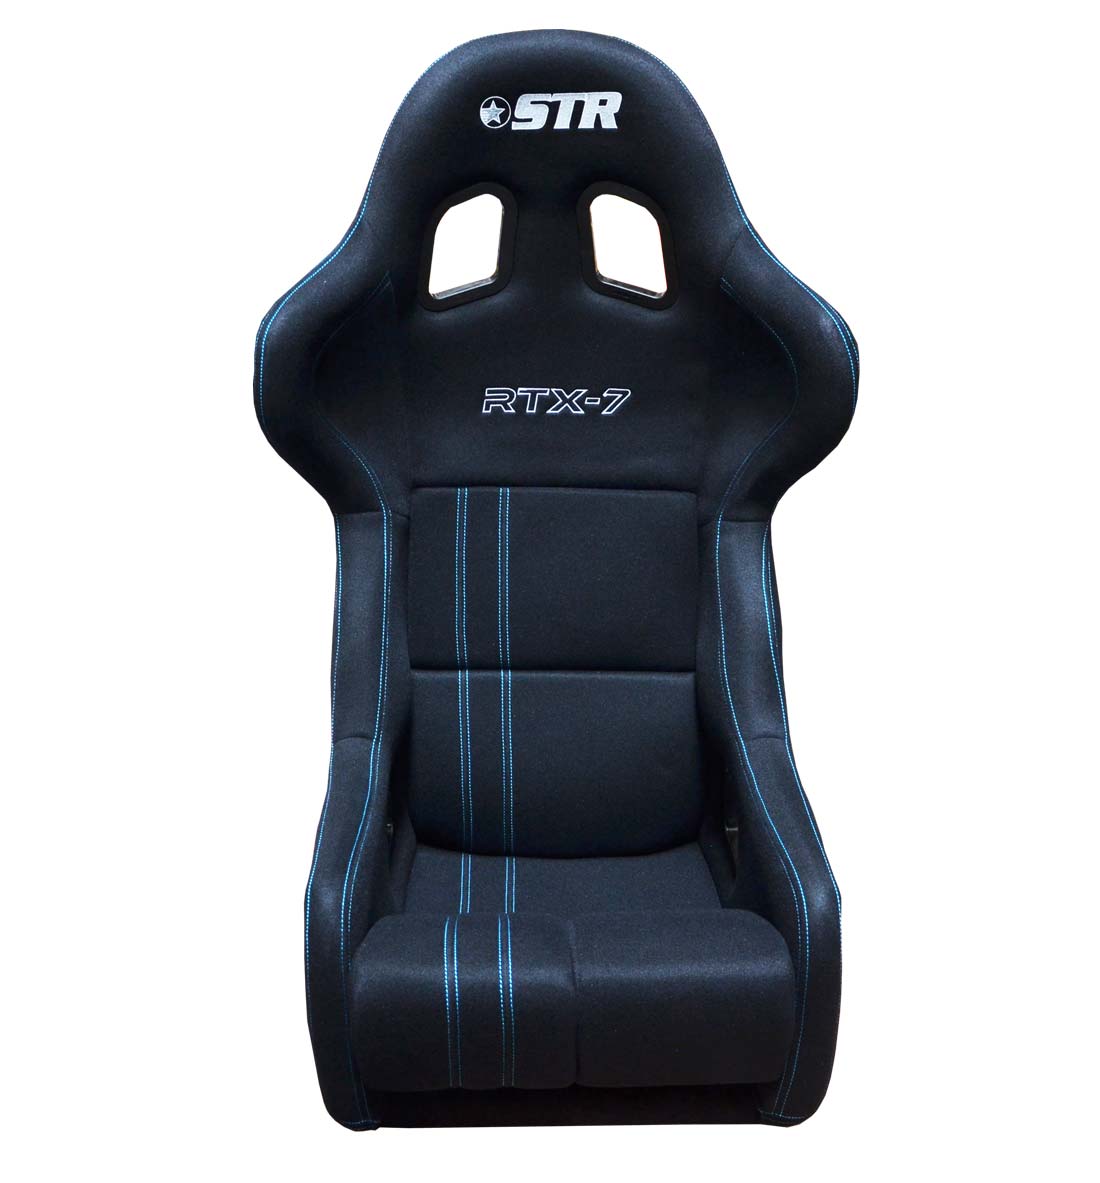 STR 'RTX-7' FIA Approved Race Seat - 2028 Black & Blue Stitching